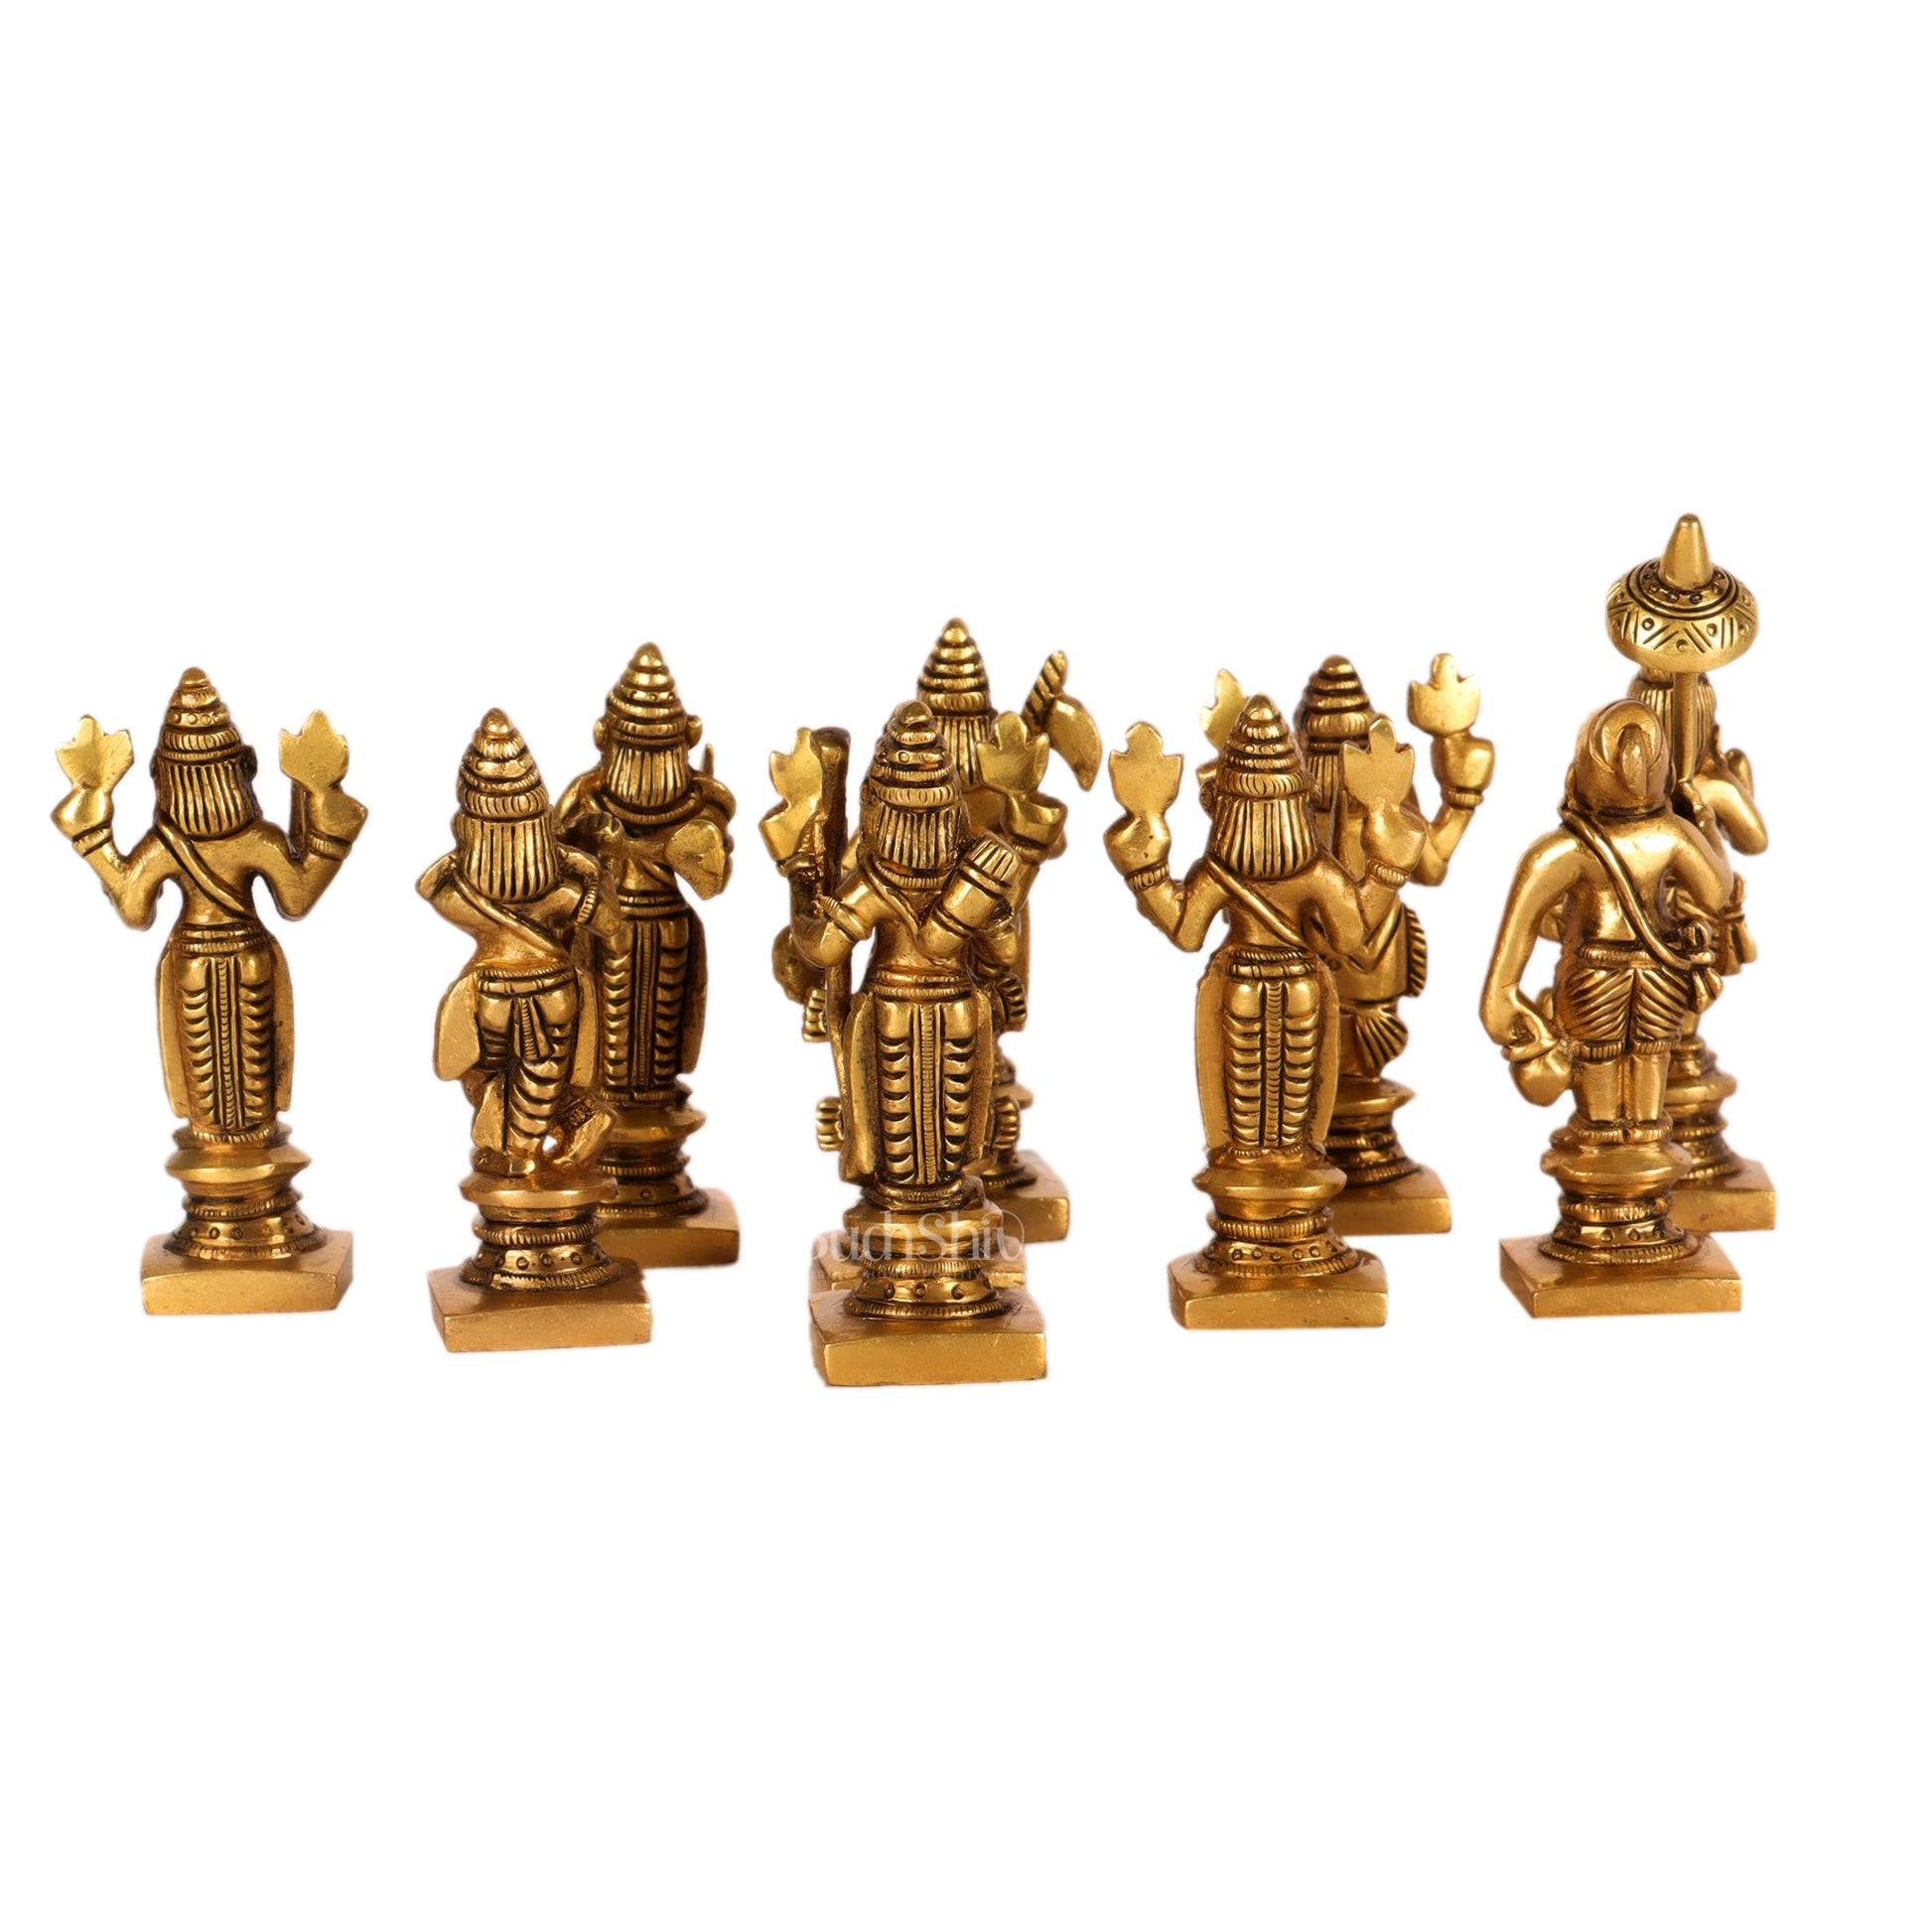 Dashavatar Brass idols 3 inch - Budhshiv.com